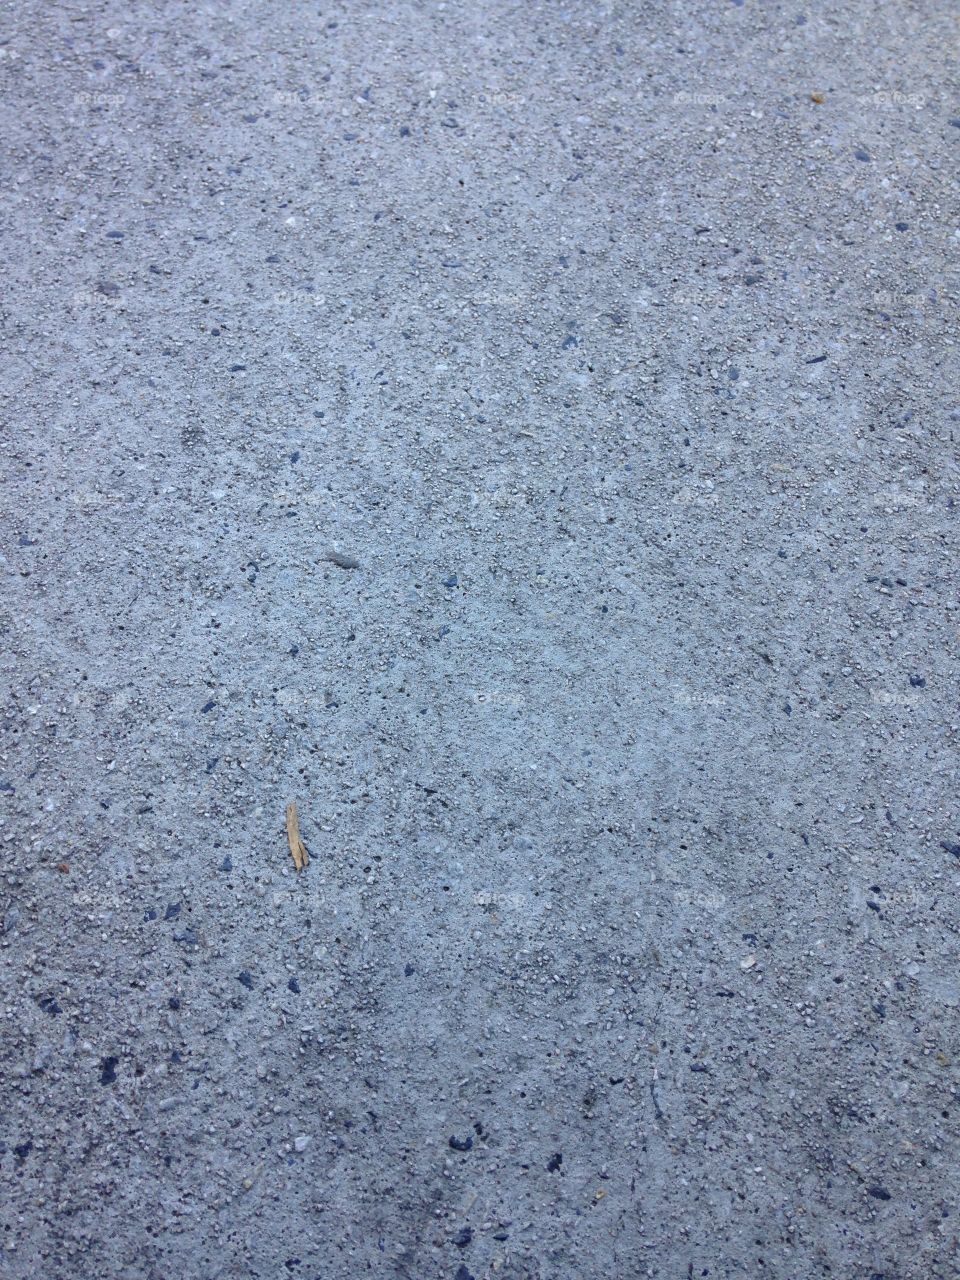 Textured speckled cement background